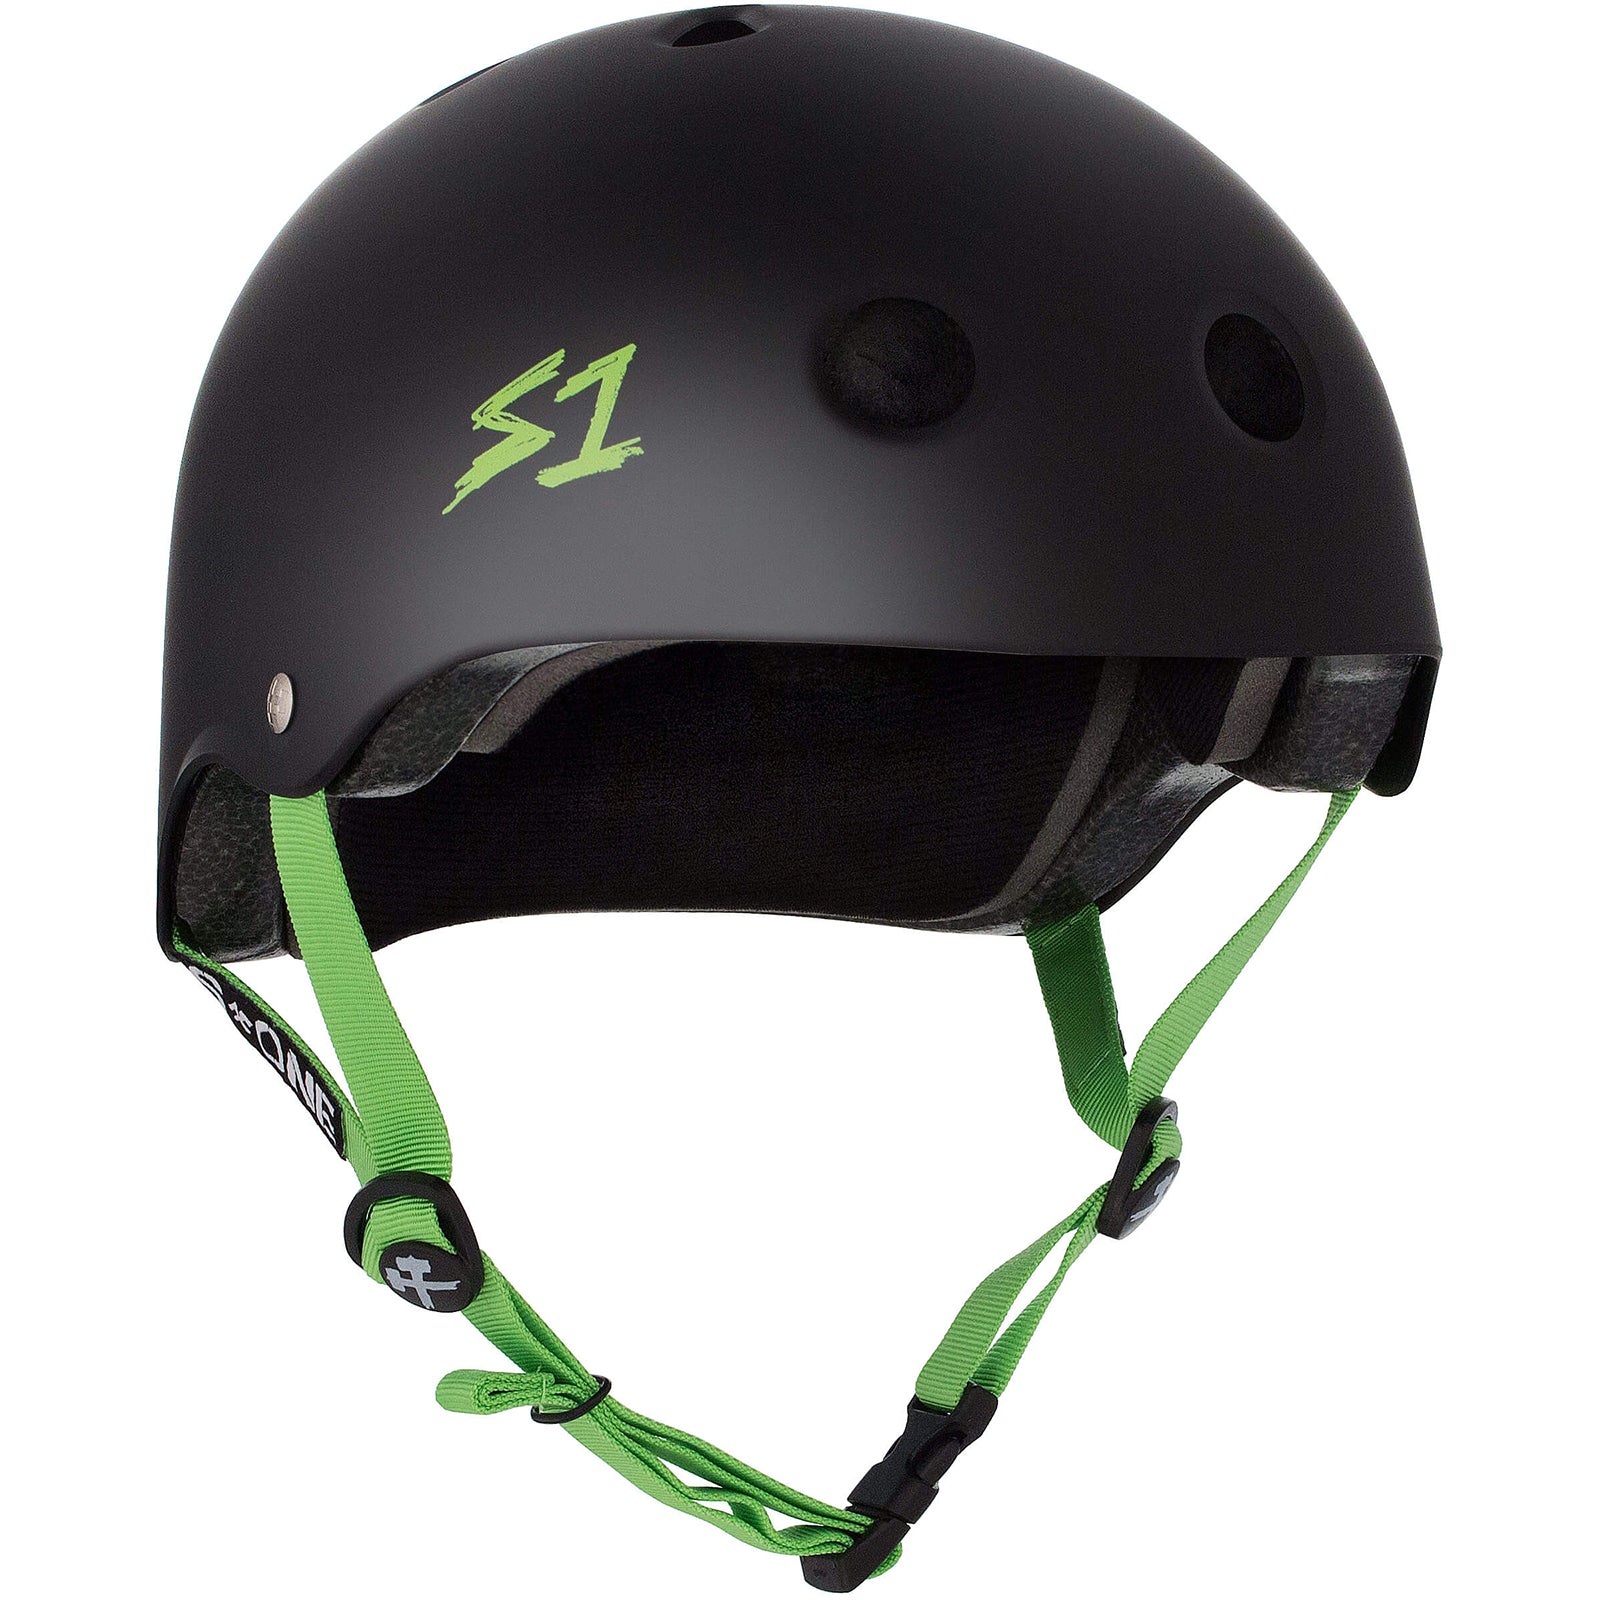 S1 Lifer Helmet - Mast black helmet with green straps